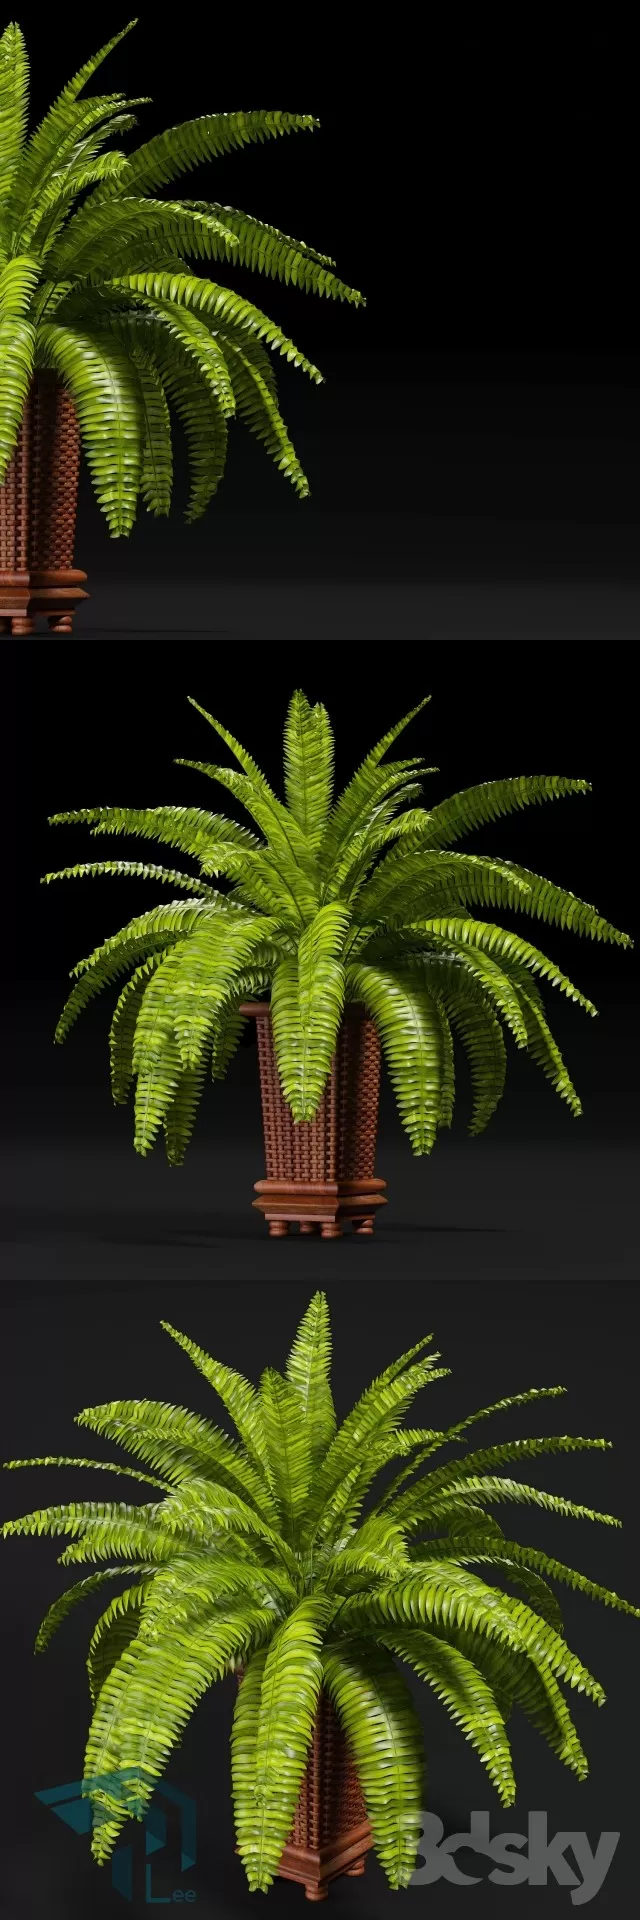 PRO PLANT 3D MODELS – 692